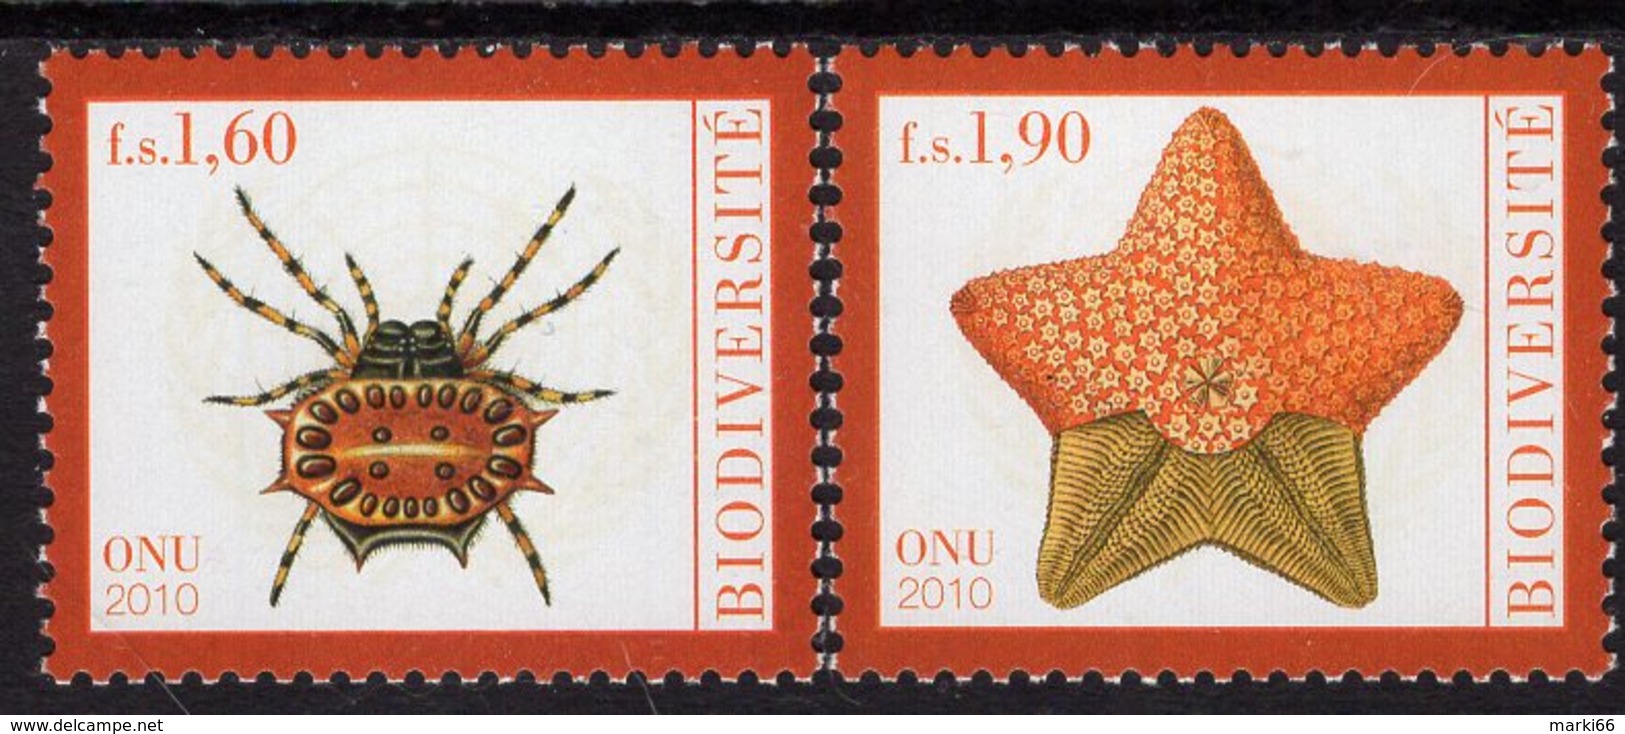 United Nations - Geneva - 2010 - Biodiversity - Mint Stamp Set - Ungebraucht